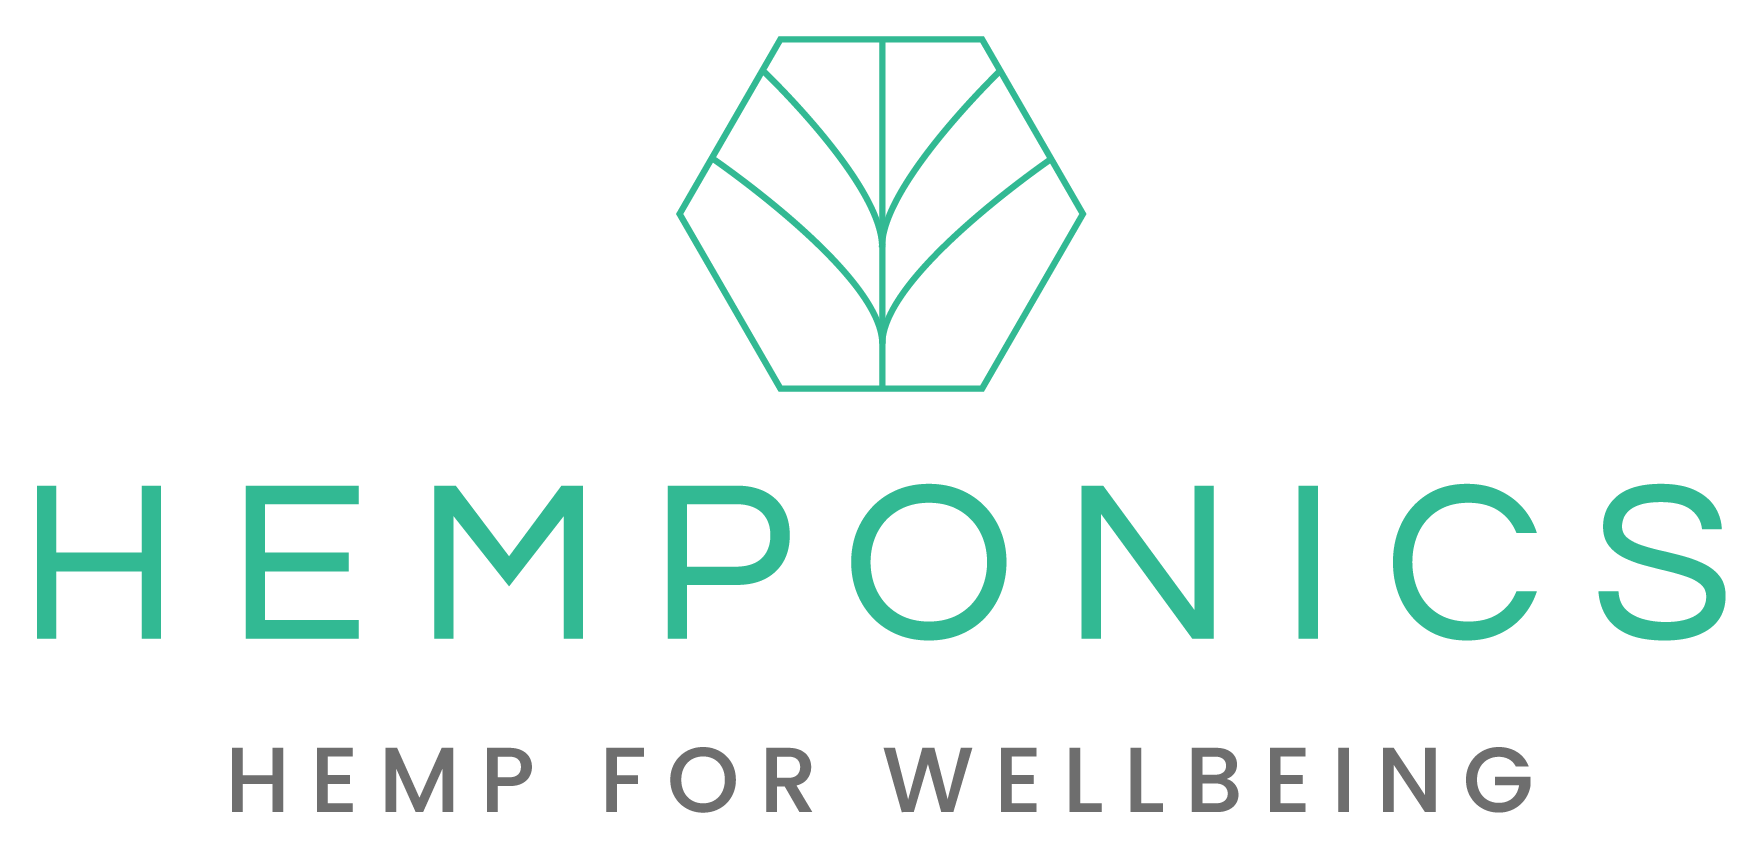 hemponics logo